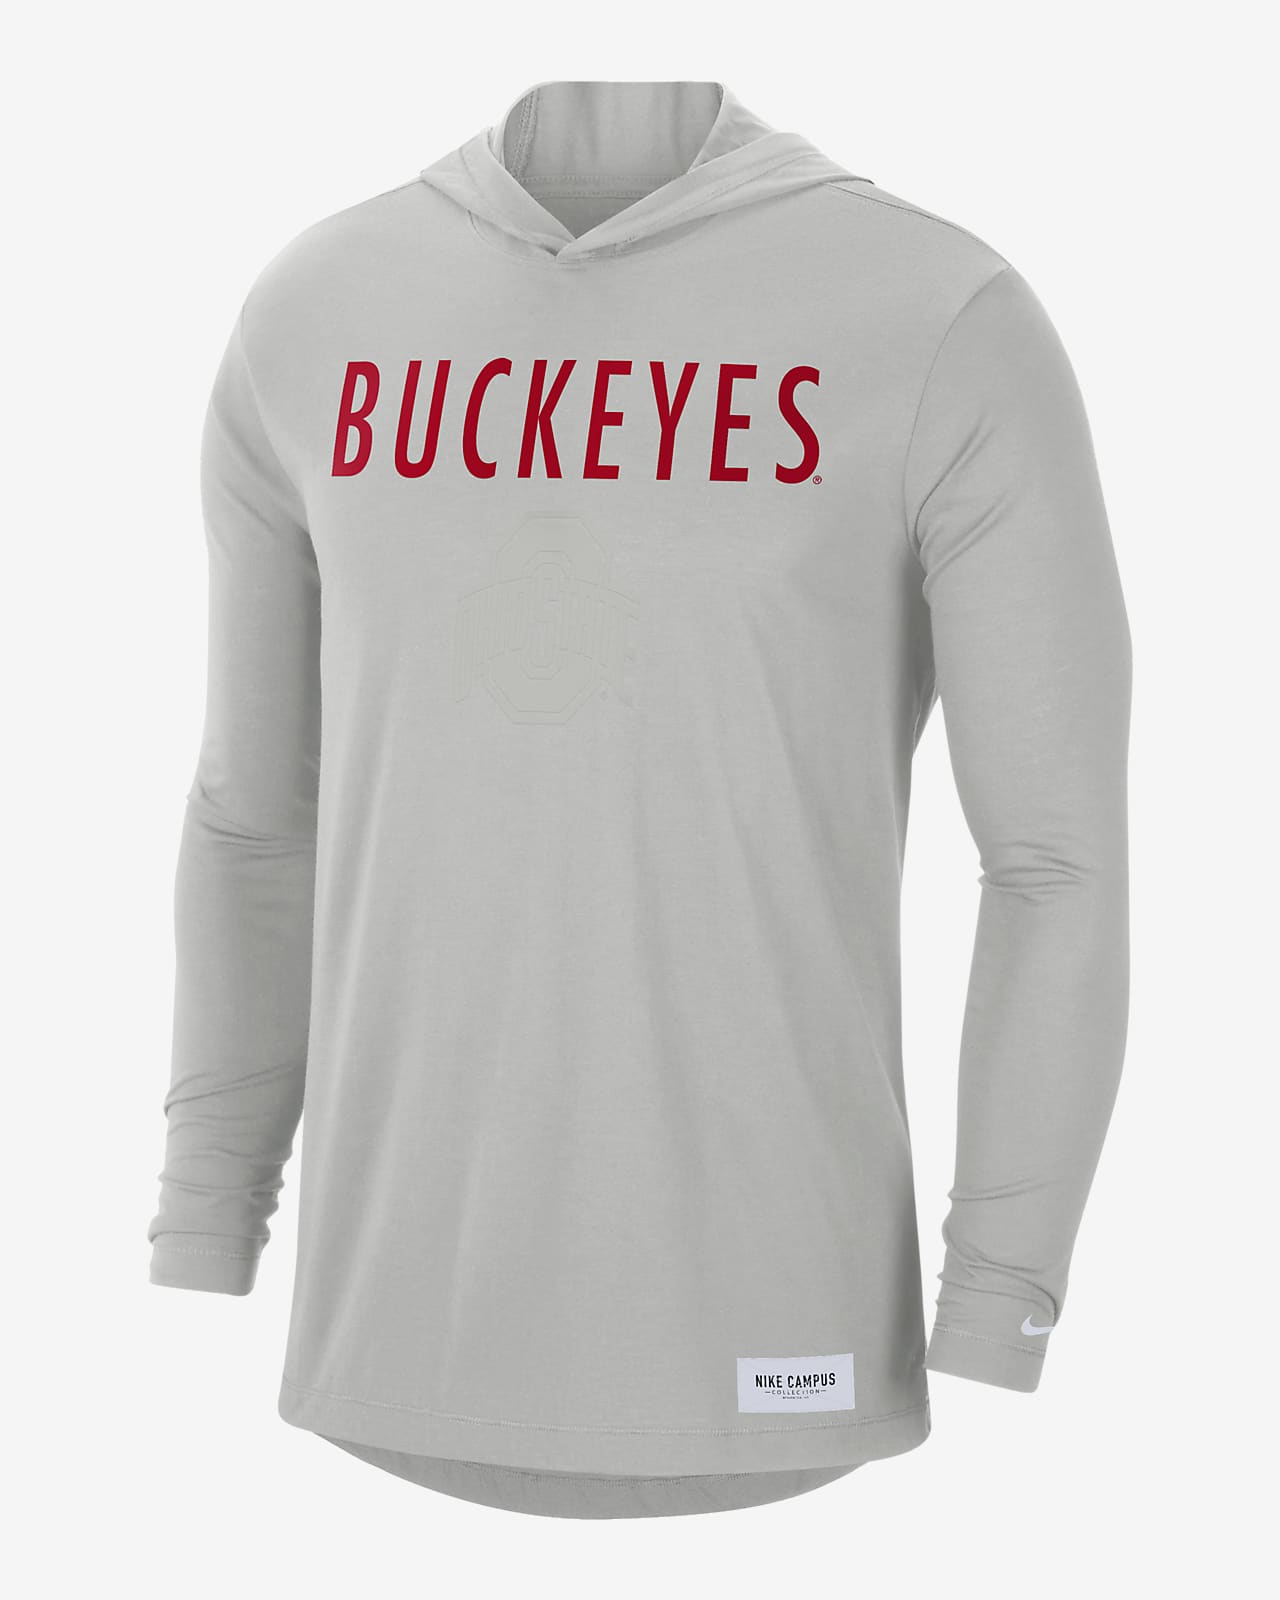 Elite Fan Shop Ohio State Buckeyes Long Sleeve Tshirt Black